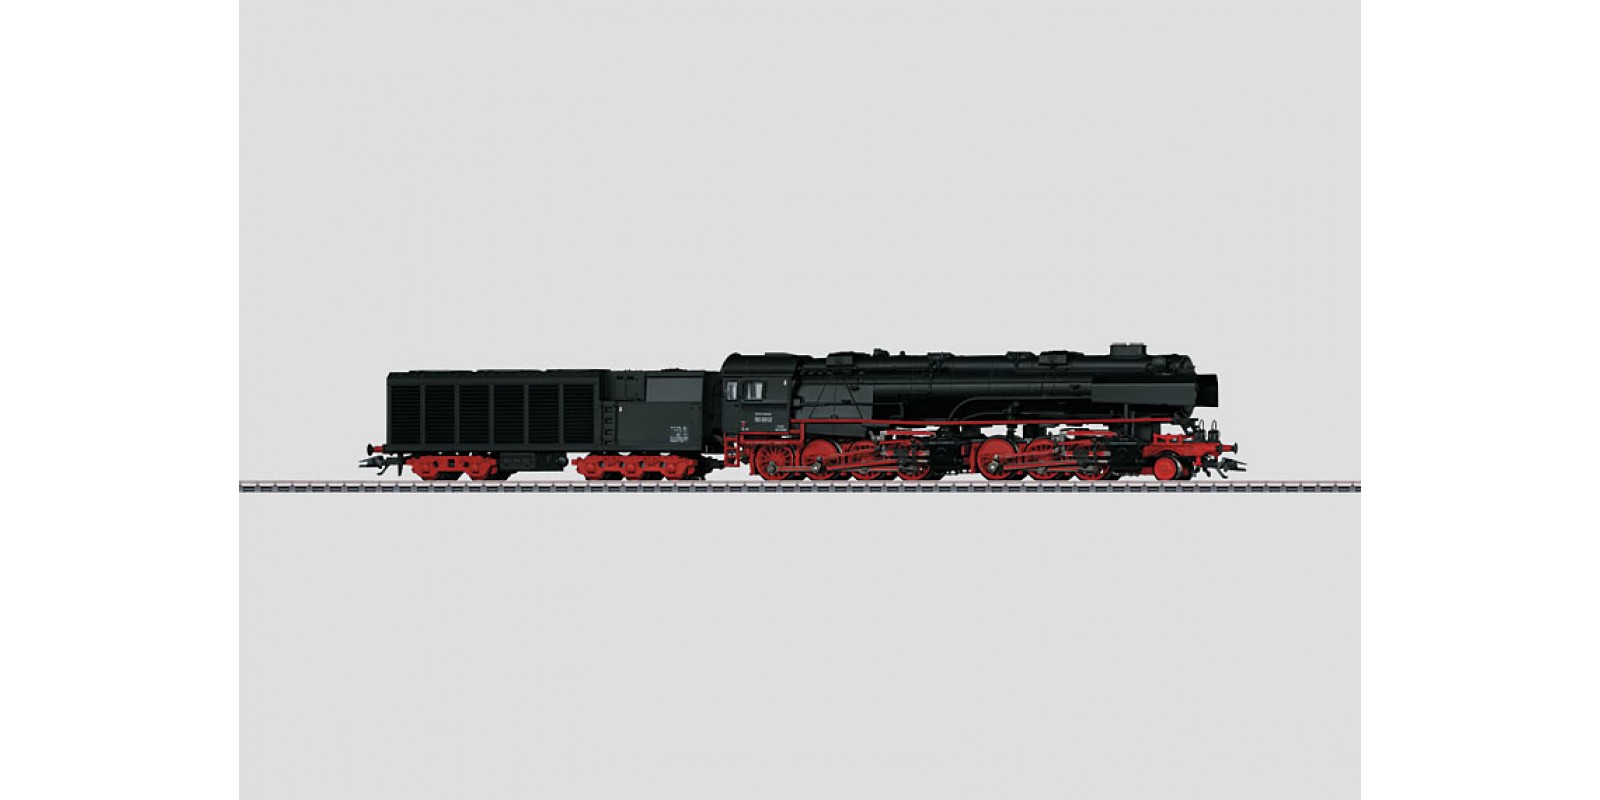 37020 Freight Steam Locomotive with a Condensation Tender